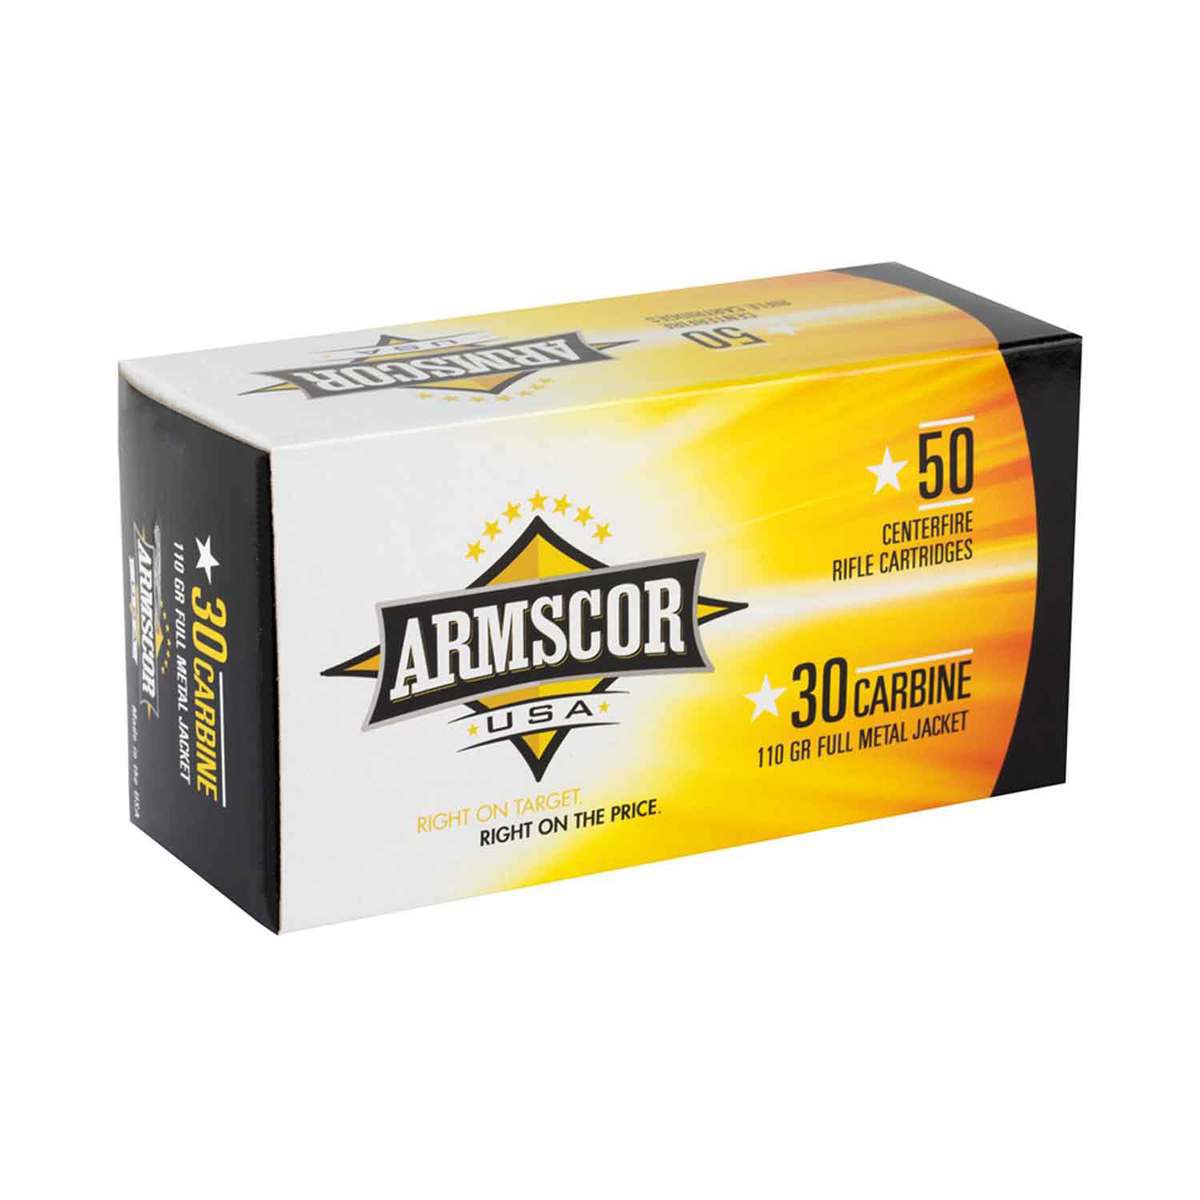 Armscor 30 Carbine 110gr Fmj Rifle Ammo 50 Rounds Sportsmans Warehouse 7504